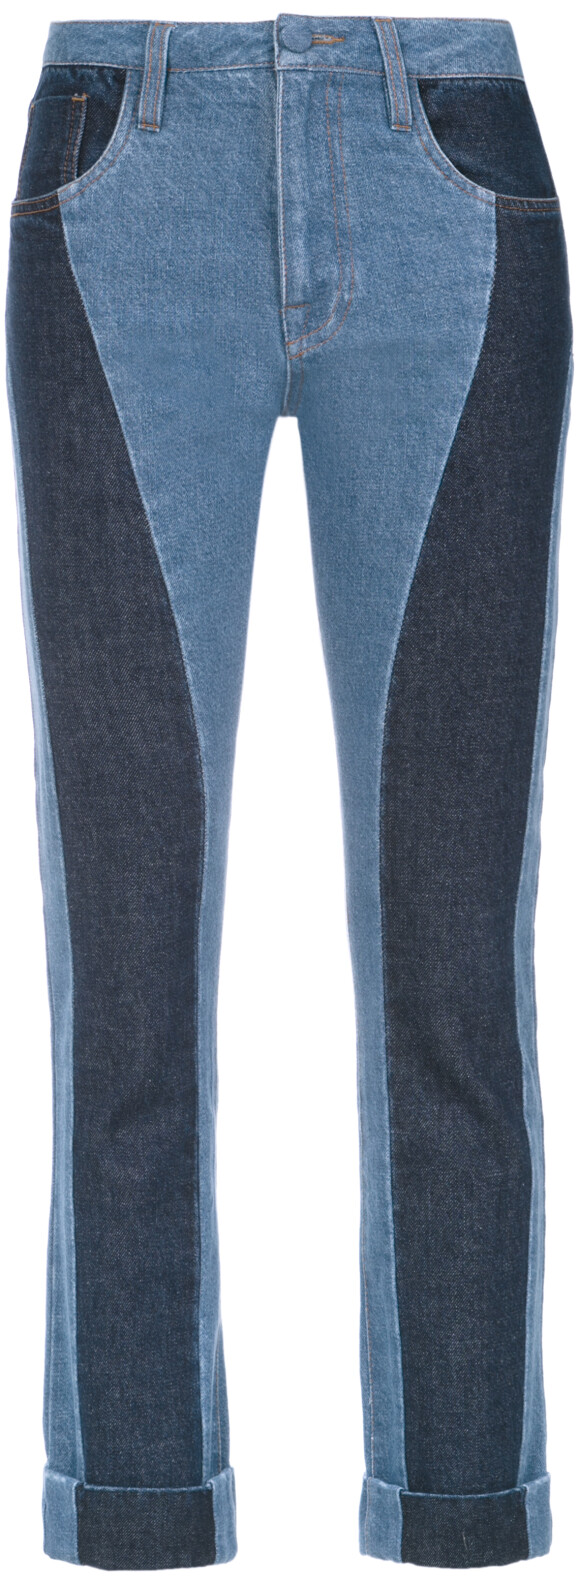 Itens básicos: jeans, Andrea Bogosian, R$ 680